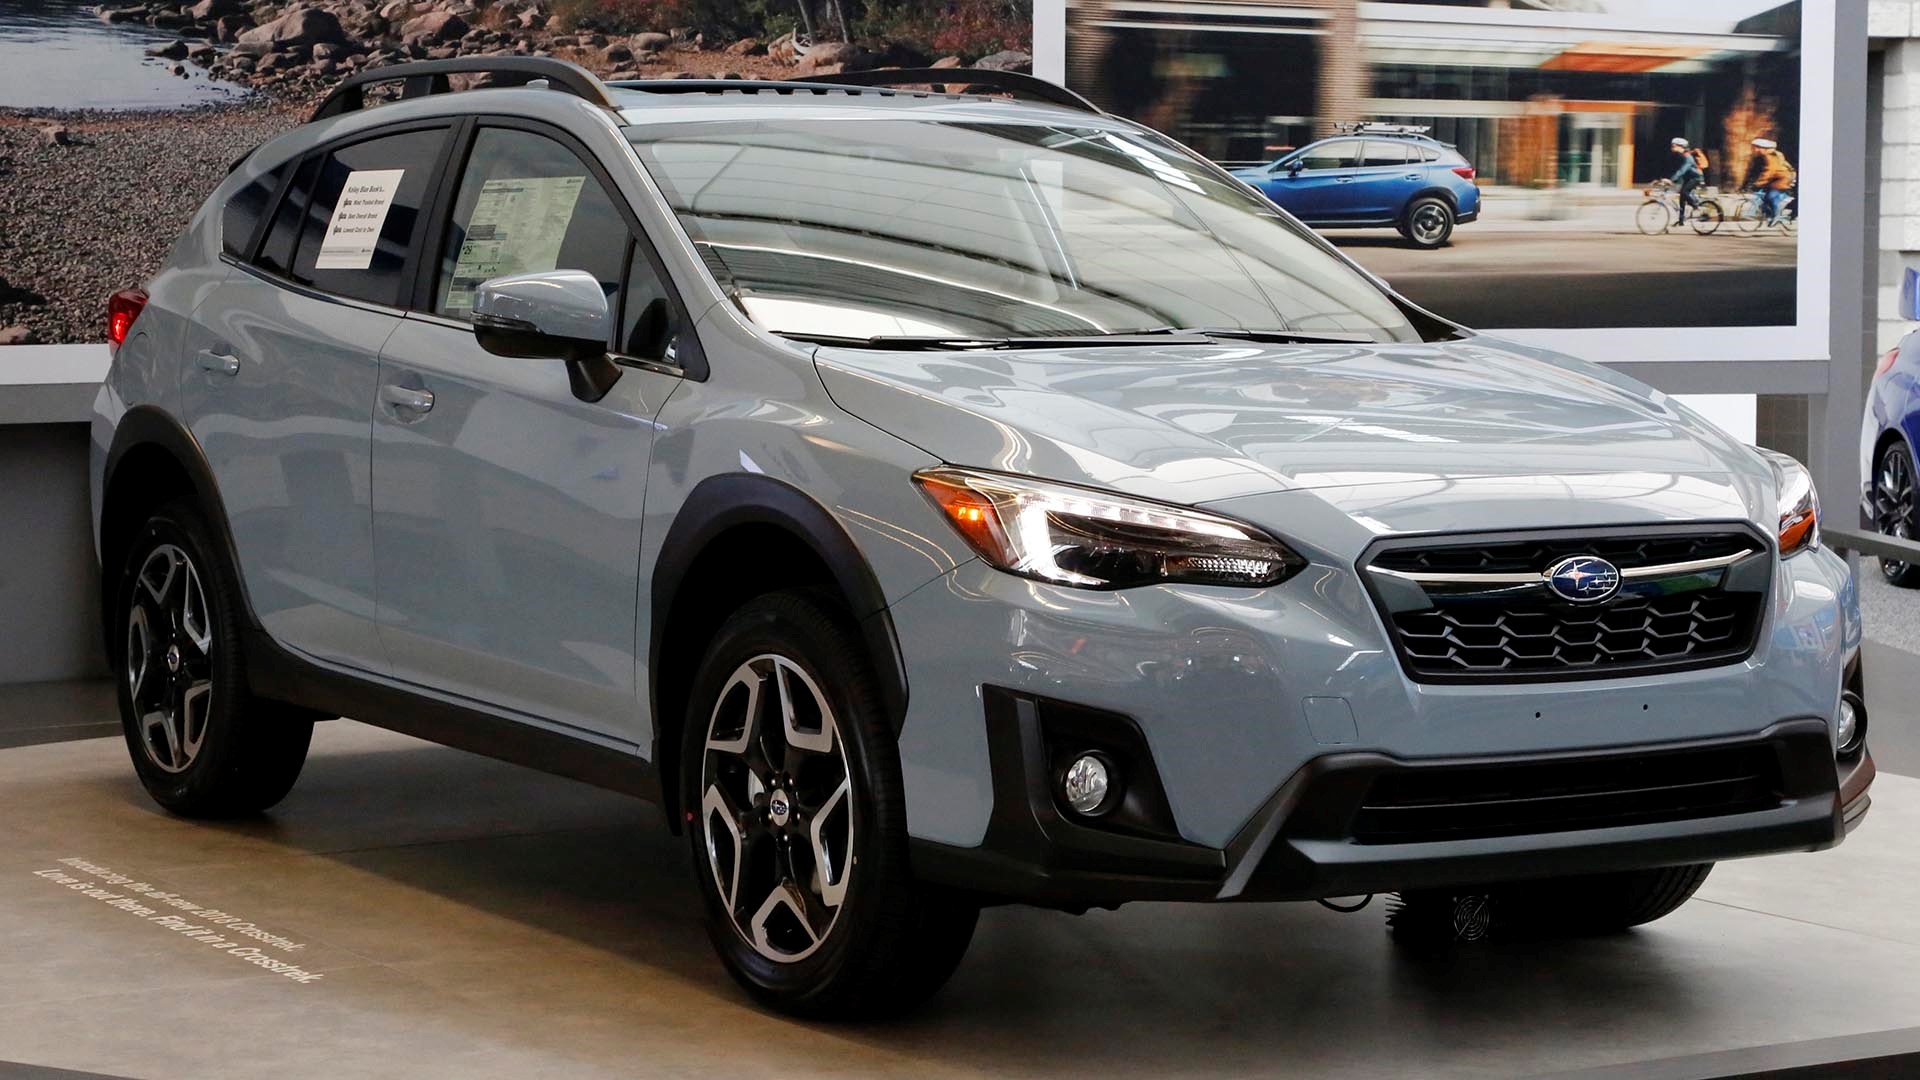 Subaru recalls 400,000 Imprezas, Crosstreks for engine